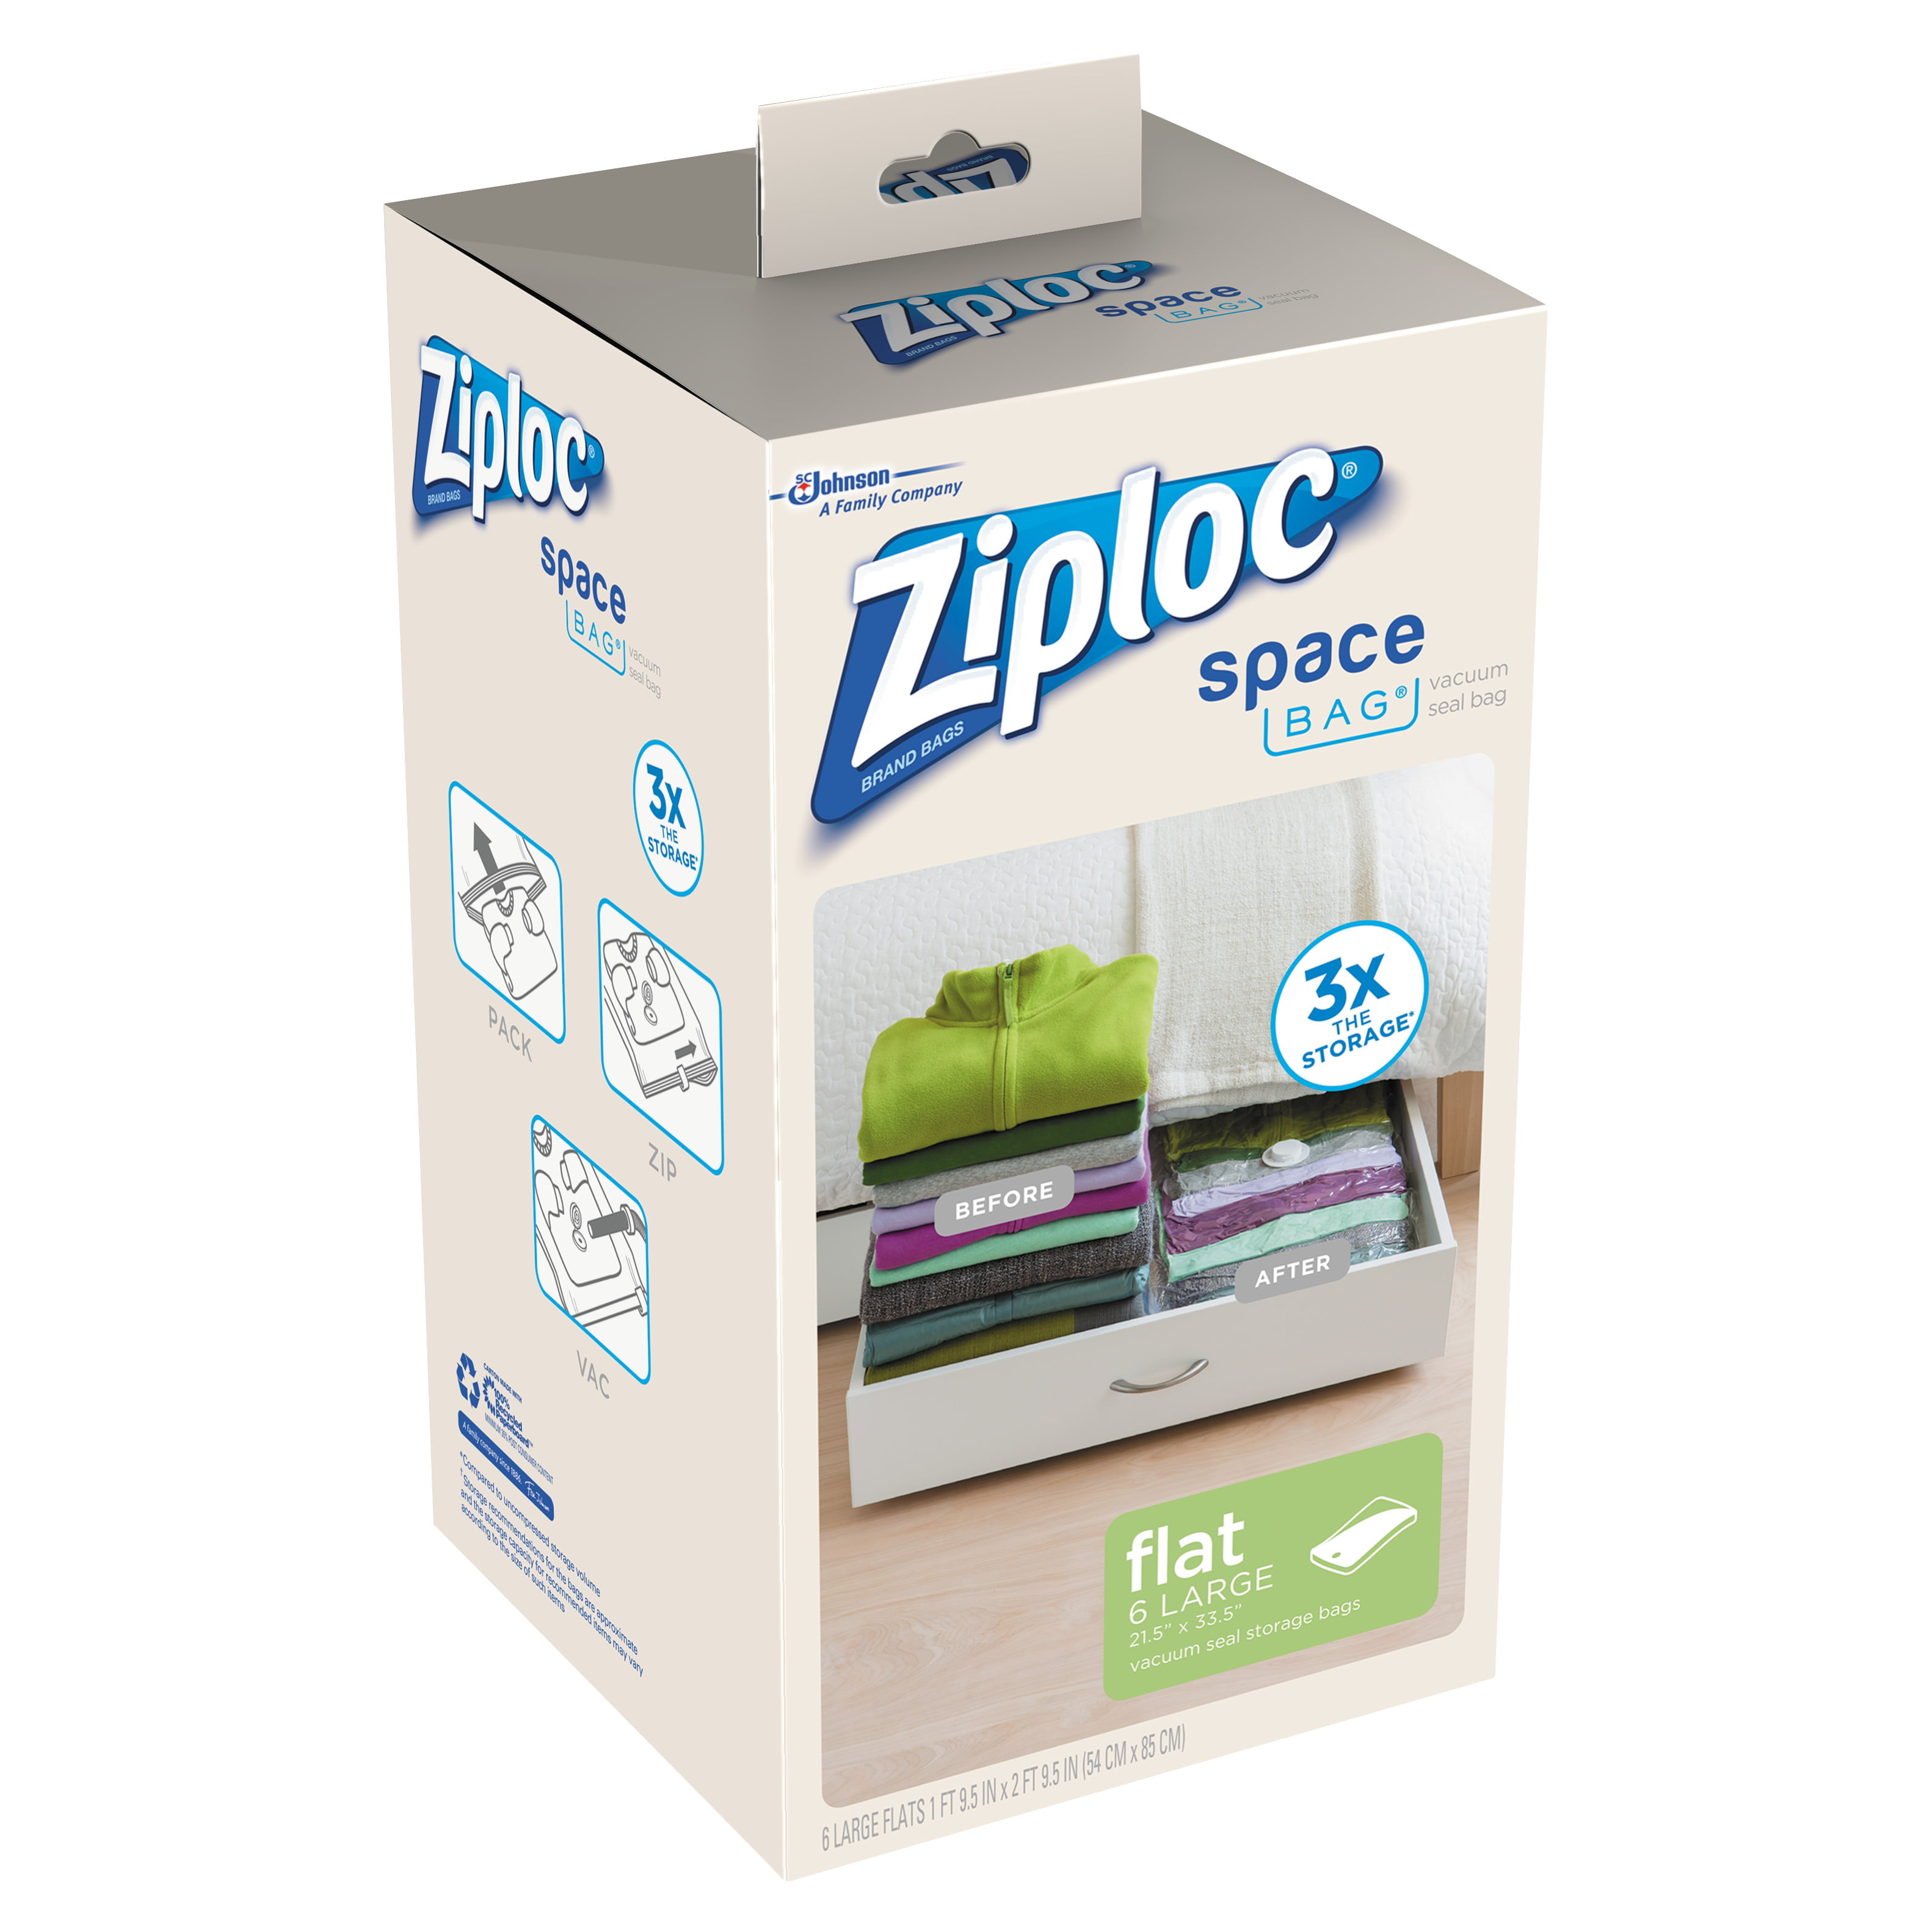 ziploc travel space bags